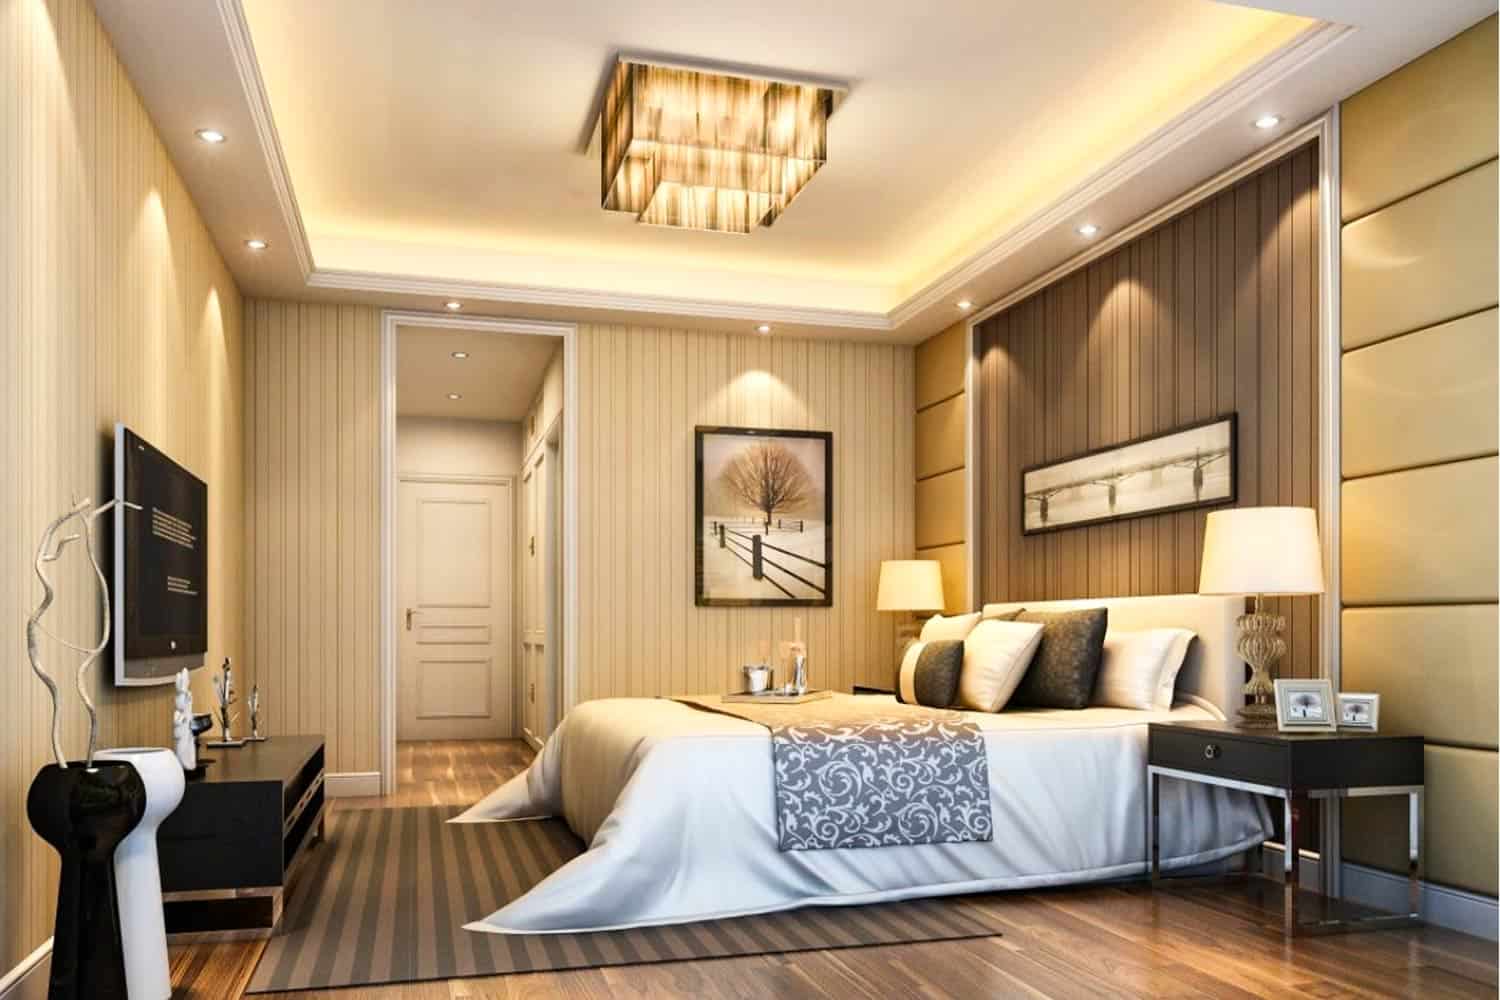 Bedroom New Ceiling Design